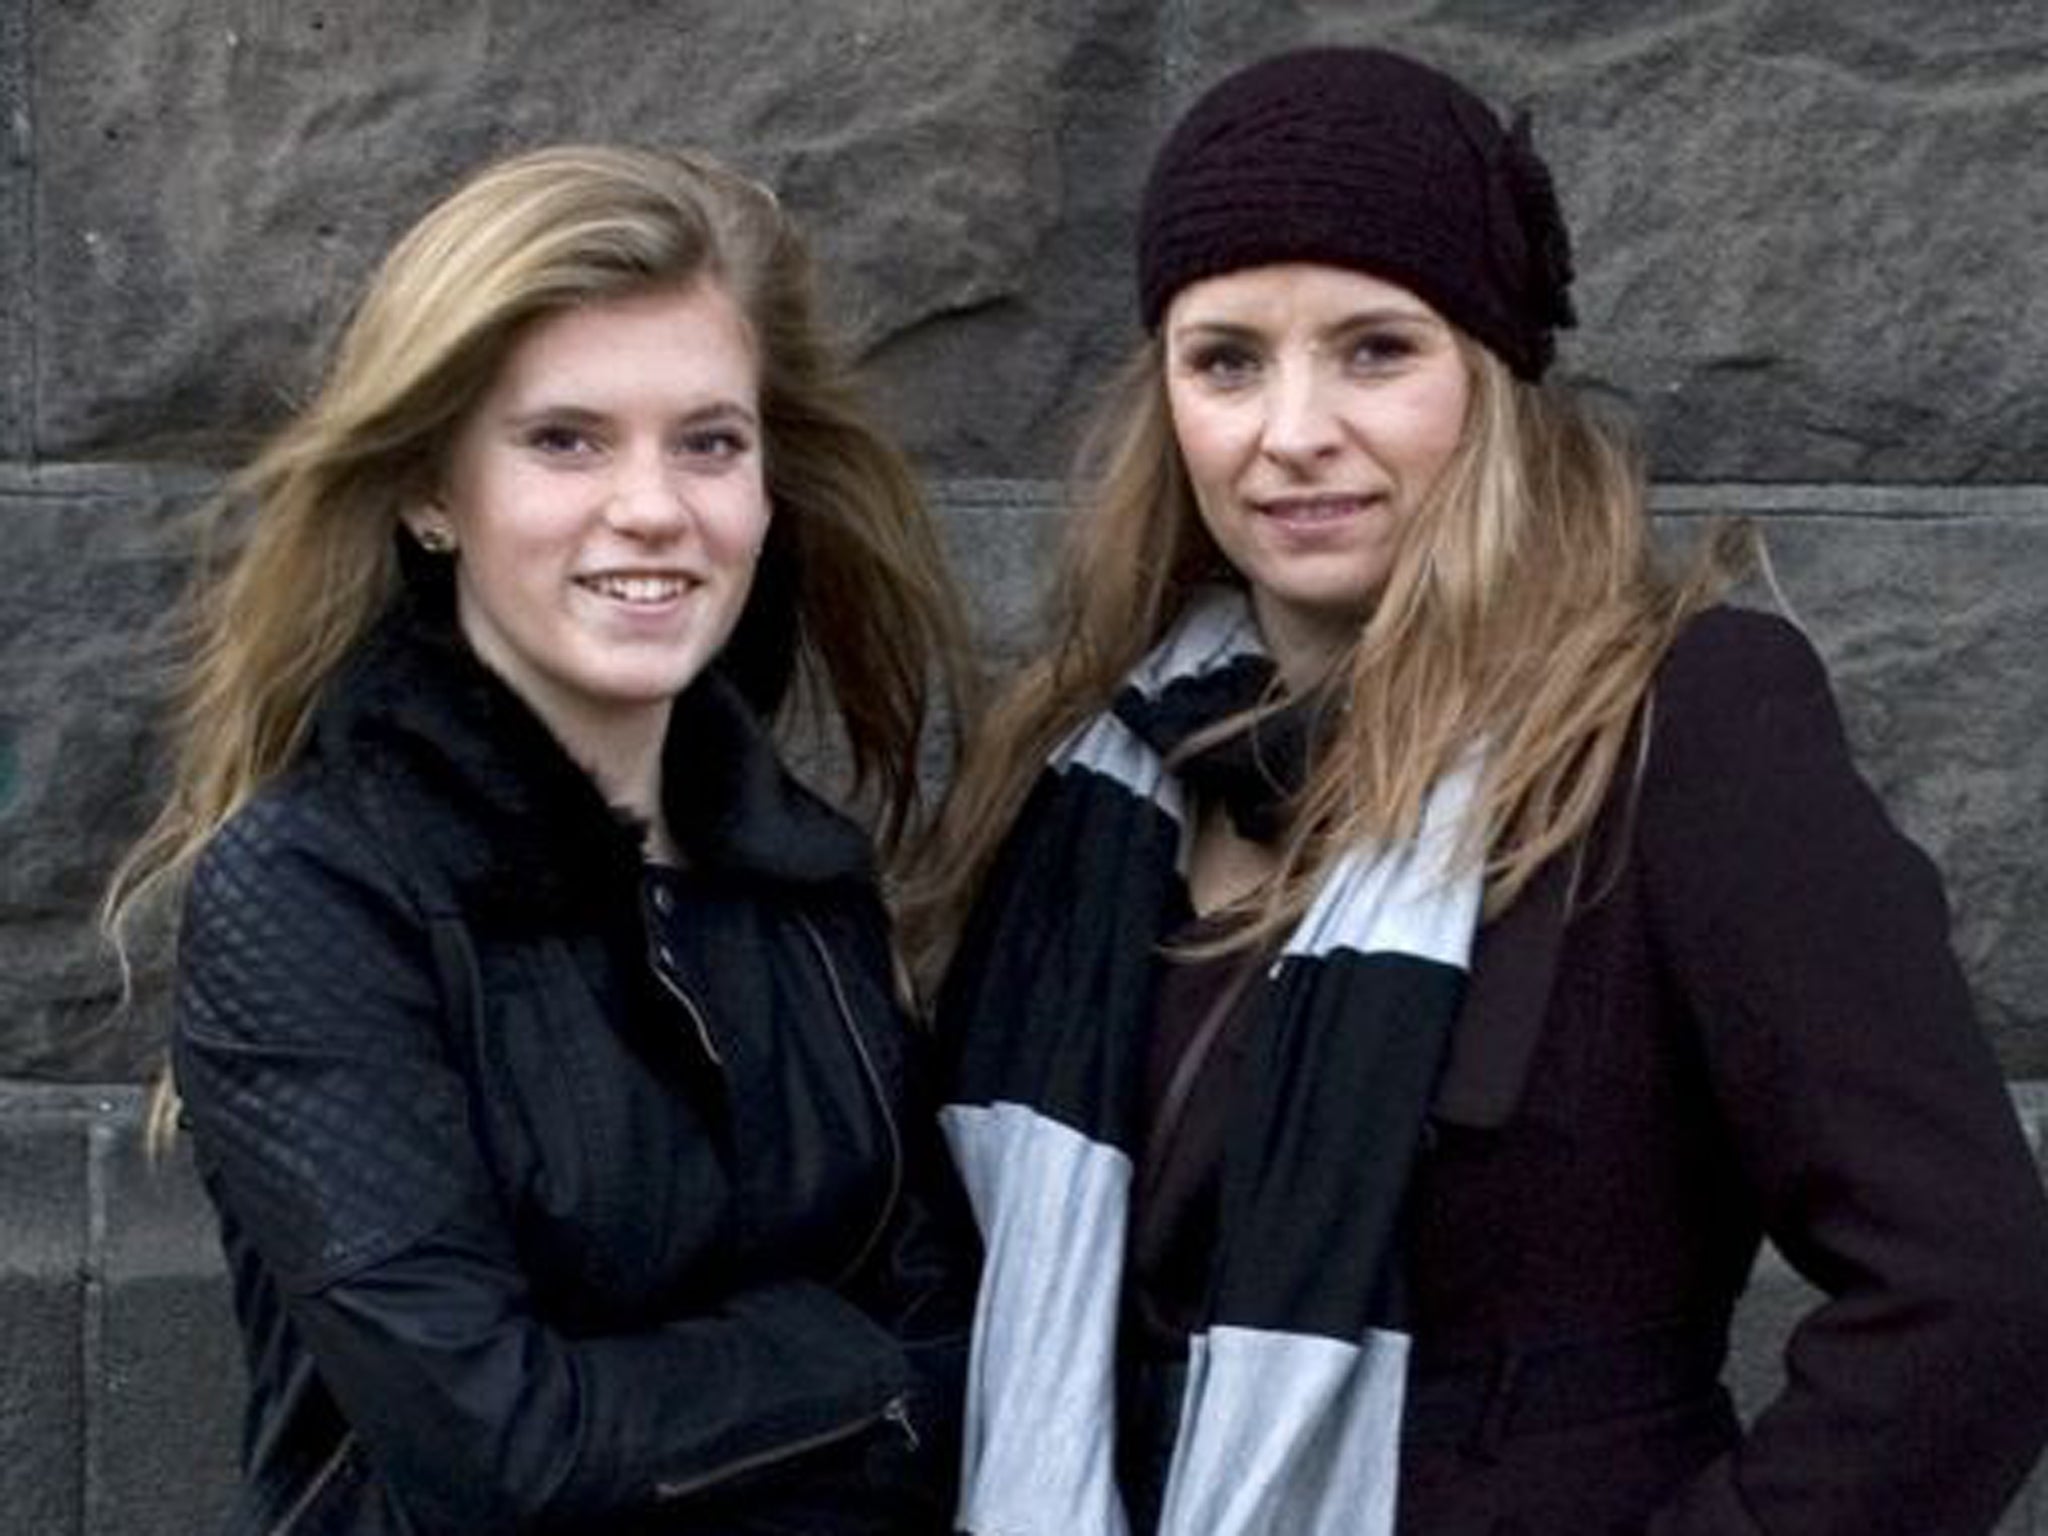 Blaer Bjarkardottir, 15, left, and her mother, Bjork Eidsdottir, outside a court building in Reykjavik